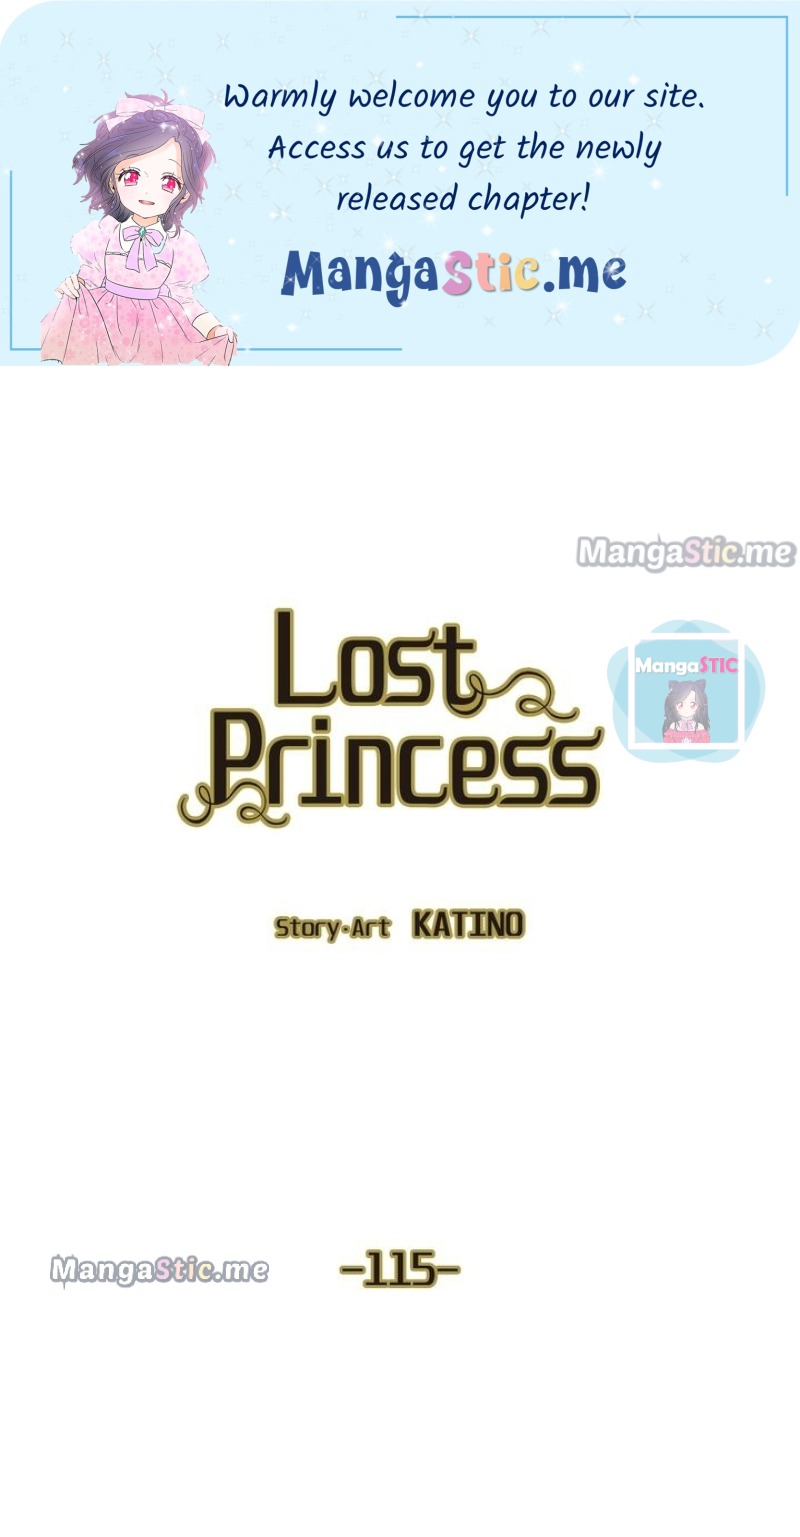 Lost Princess - Page 1